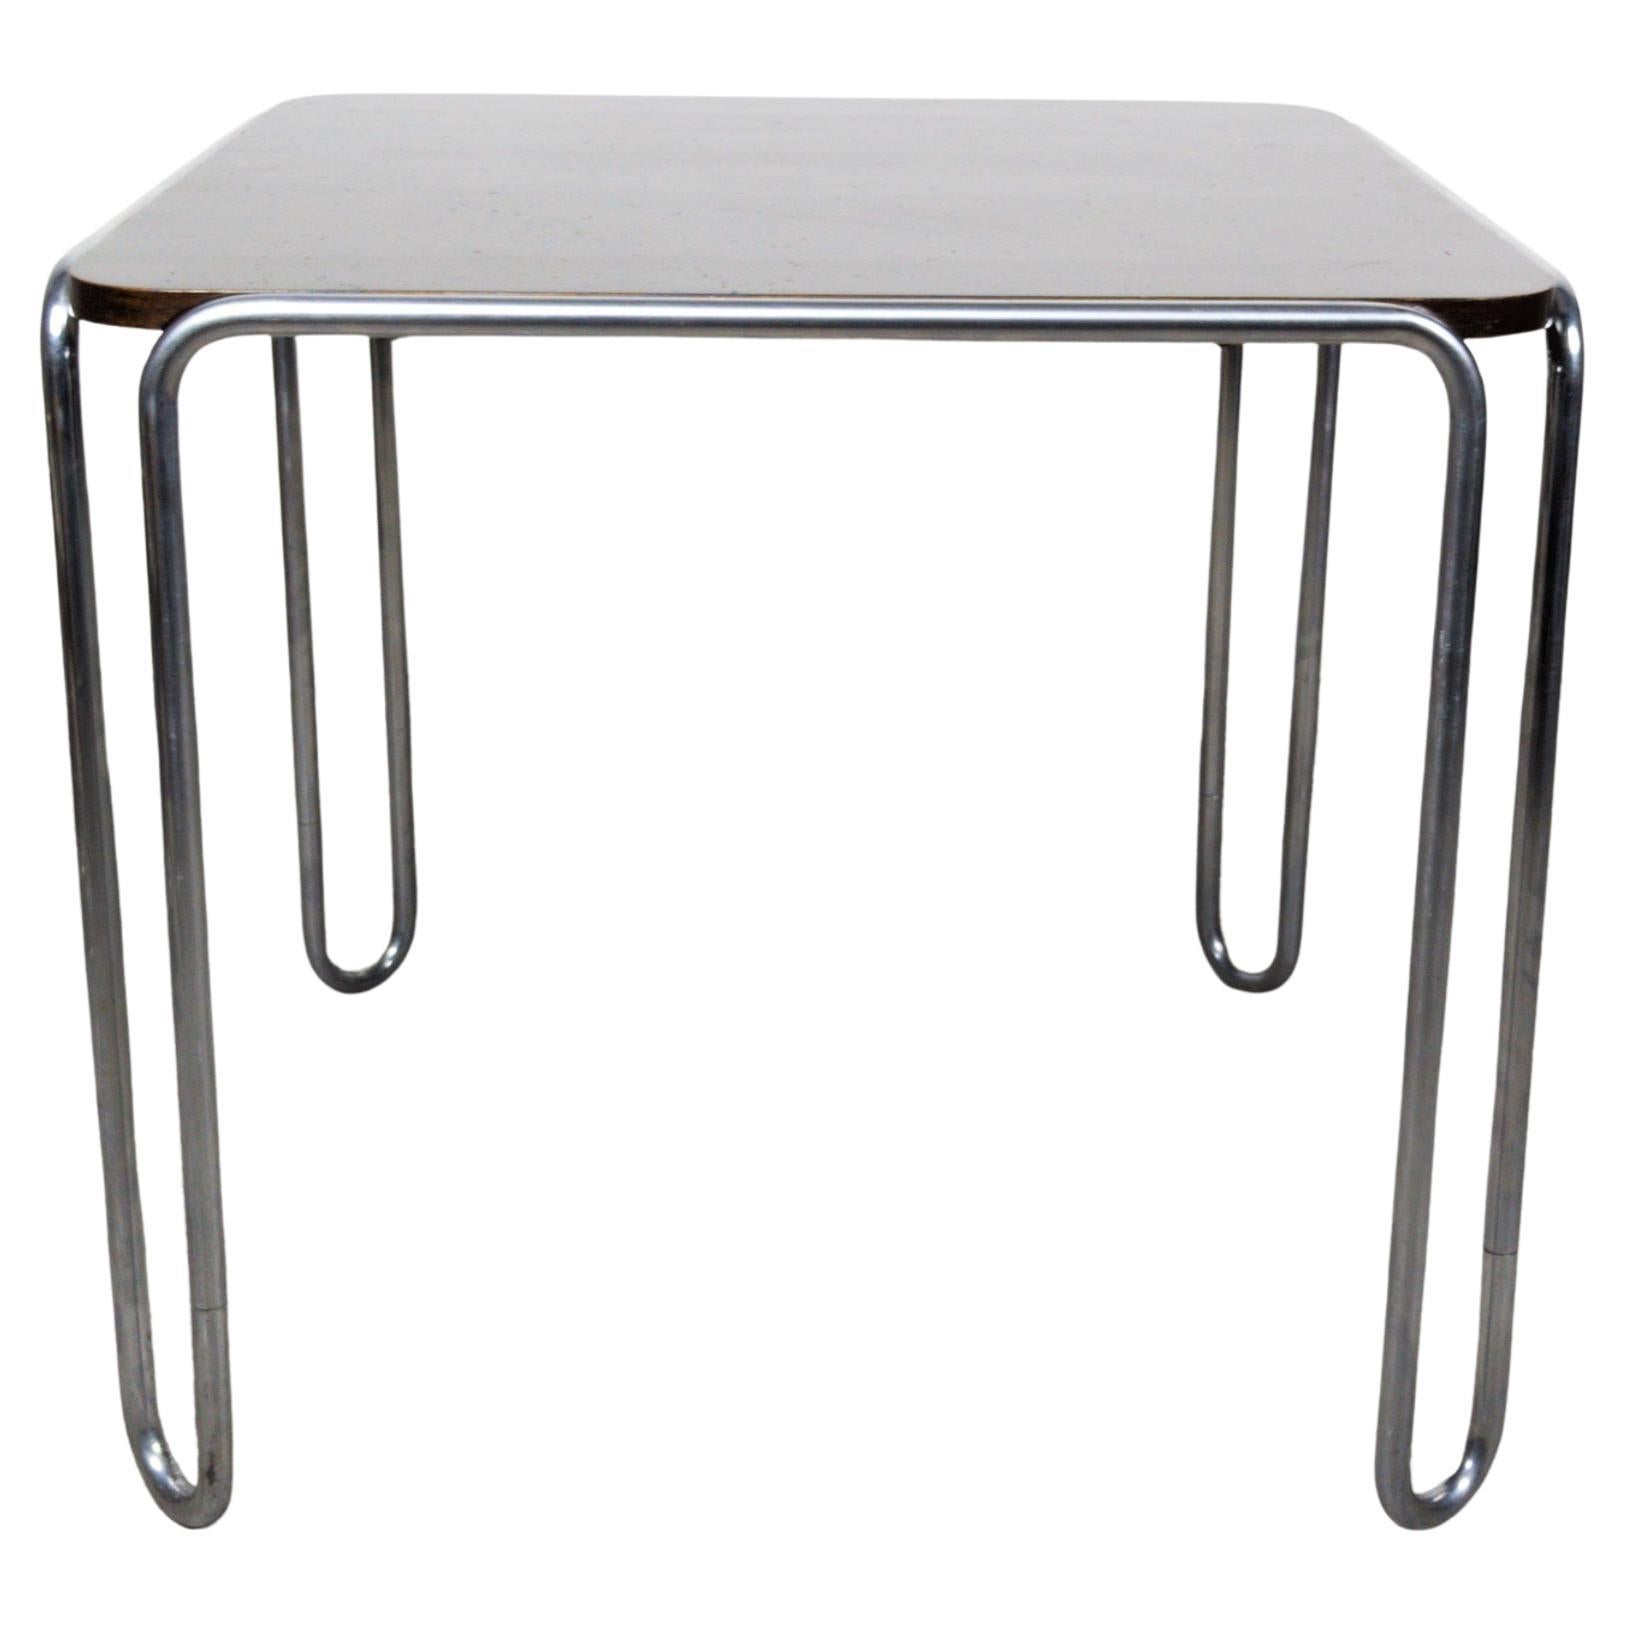 Thonet B 10 tubular steel table by Marcel Breuer  For Sale